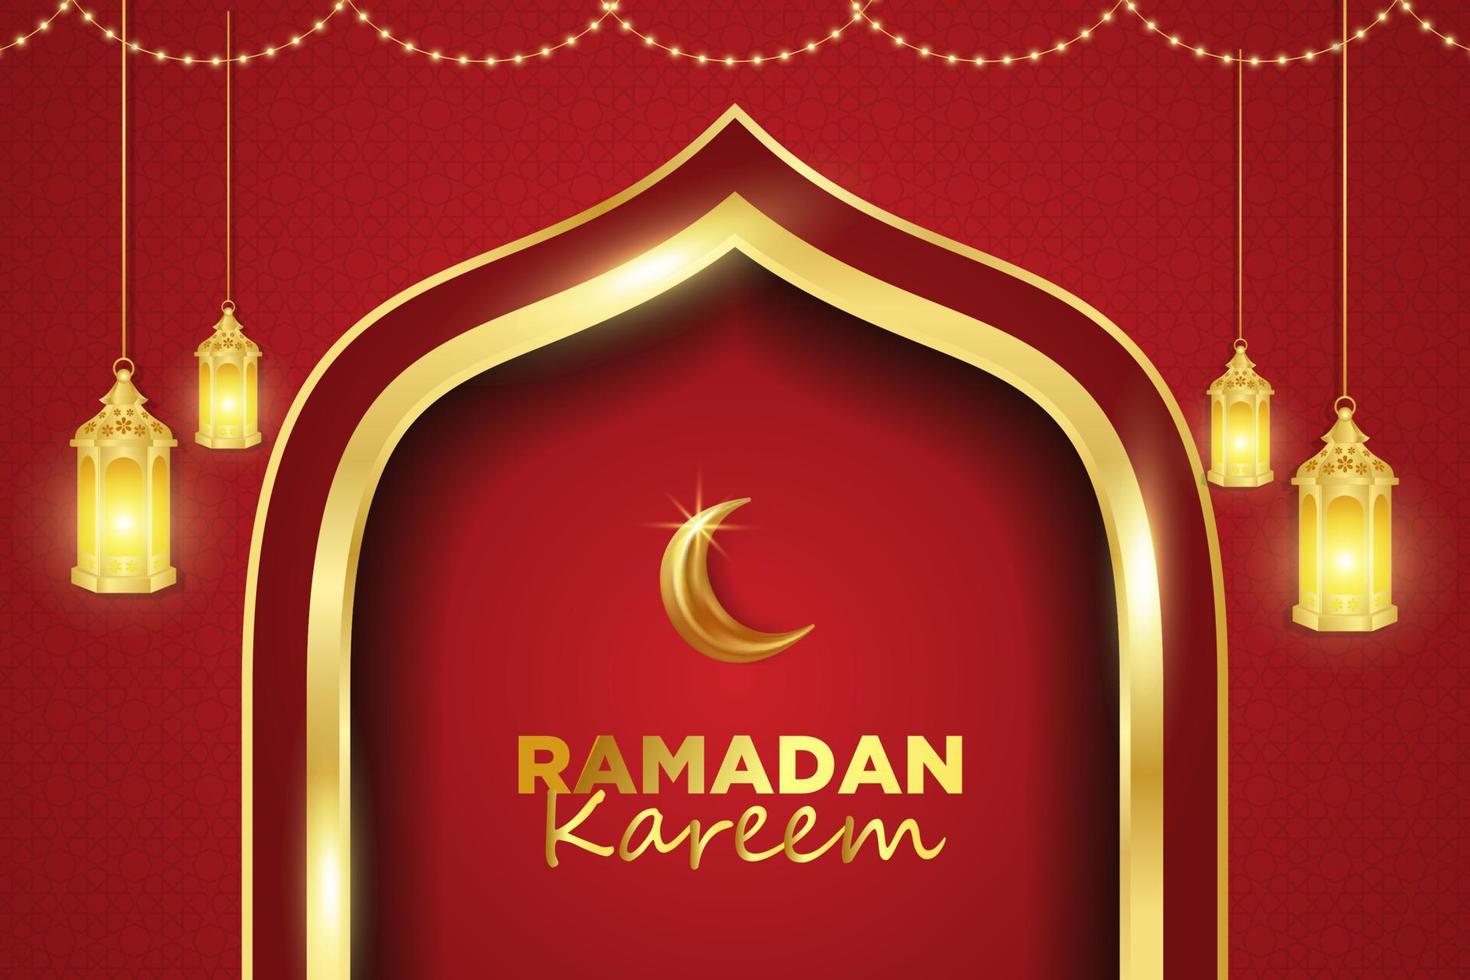 Ramadan Kareem Islamic background and banner illustration vector